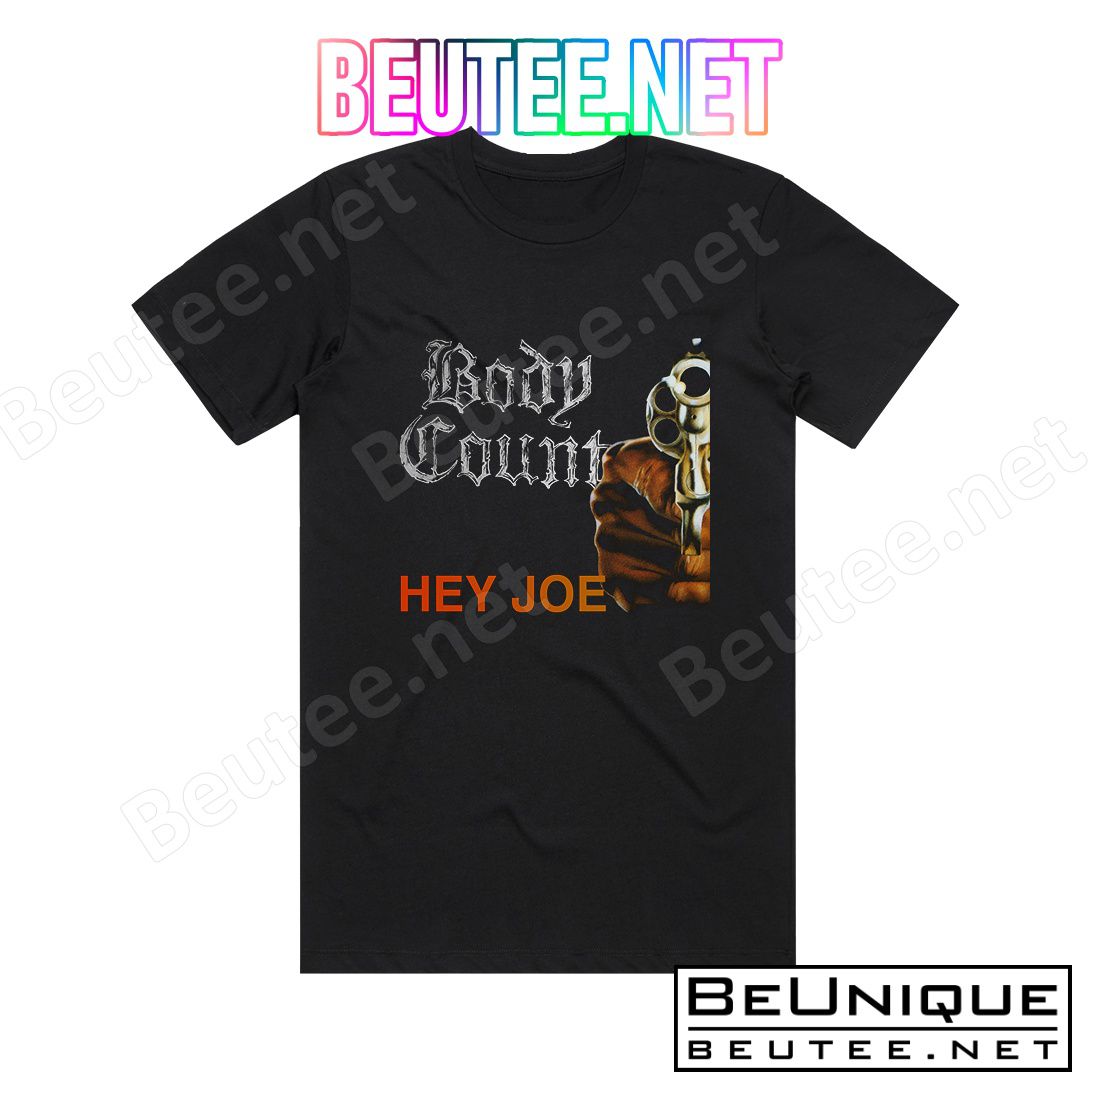 Body Count Hey Joe Album Cover T-Shirt